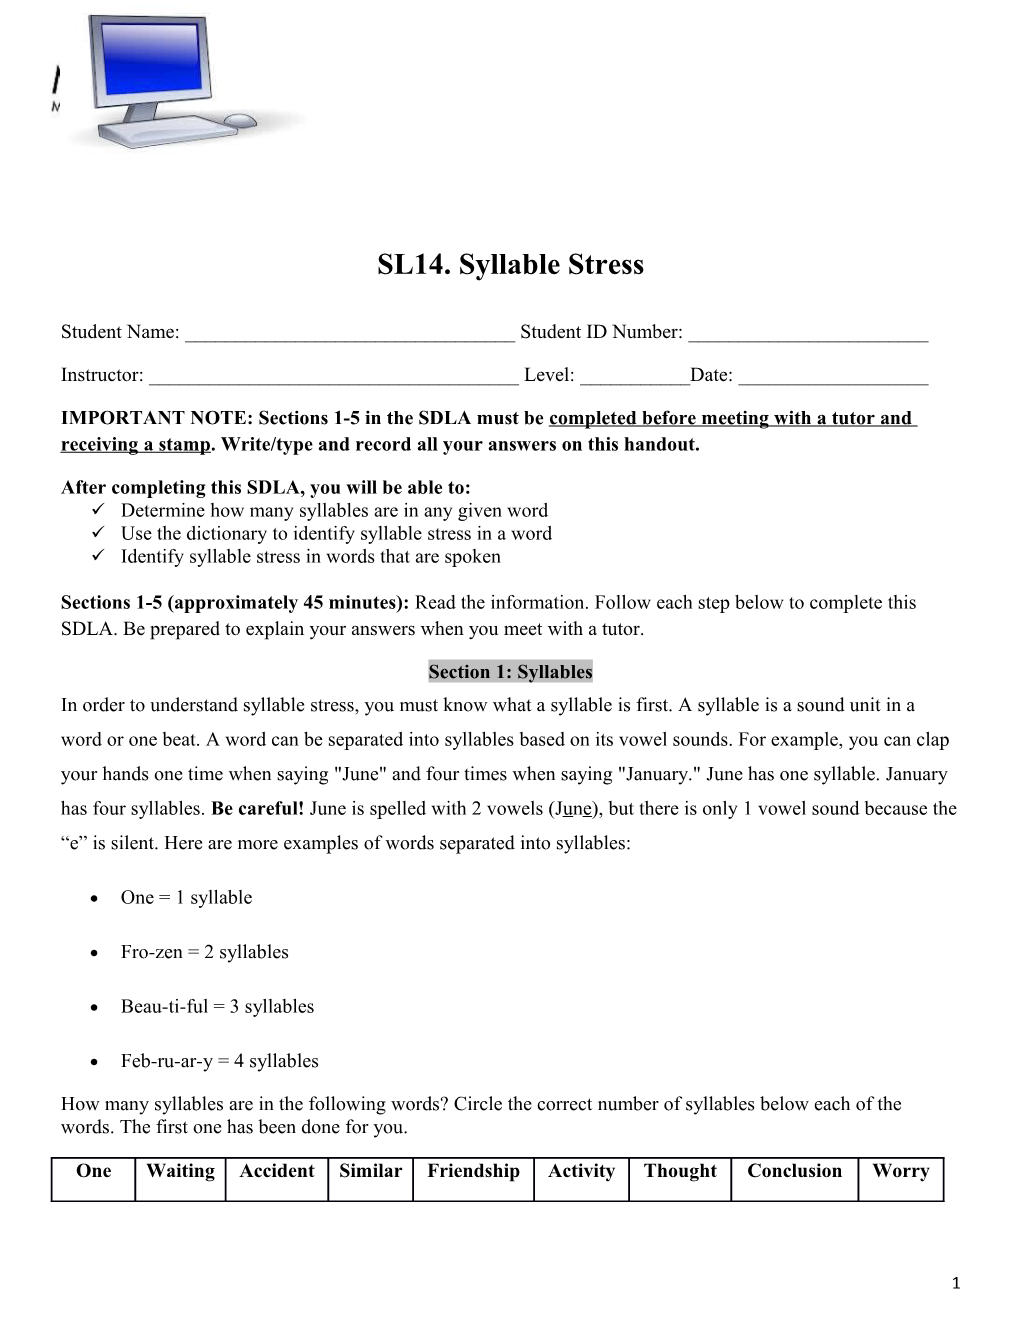 SL14. Syllable Stress